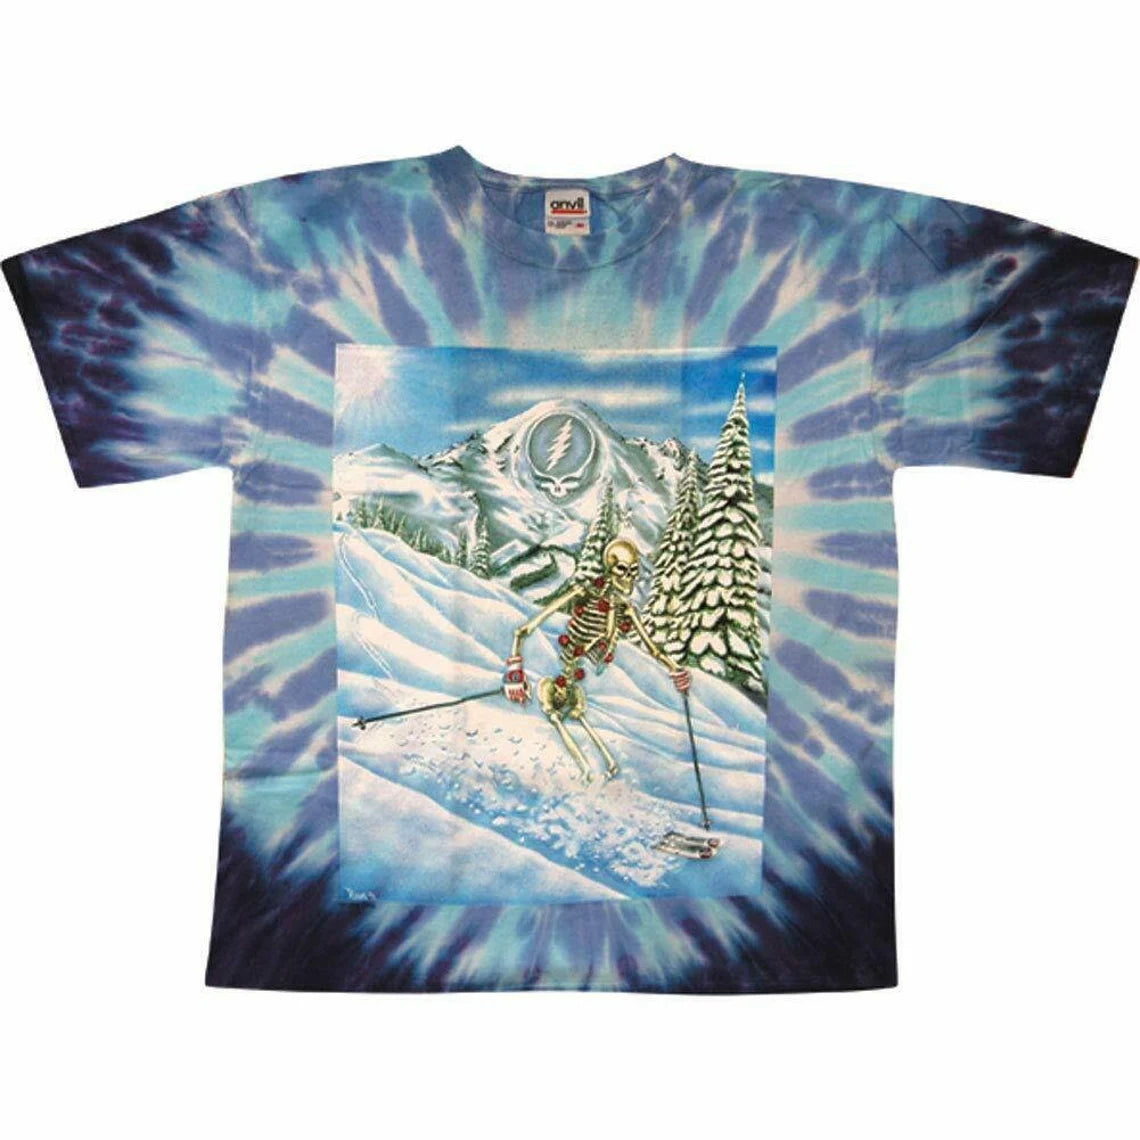 Grateful Dead Powderman skiing shirt - Grateful Dead skiing tie dye shirt - Bertha skiing shirt - Skelton skier shirt - Dead Head shirt - sizes: small, medium, large, XL, 2XL, 3XL, 4XL and 5XL